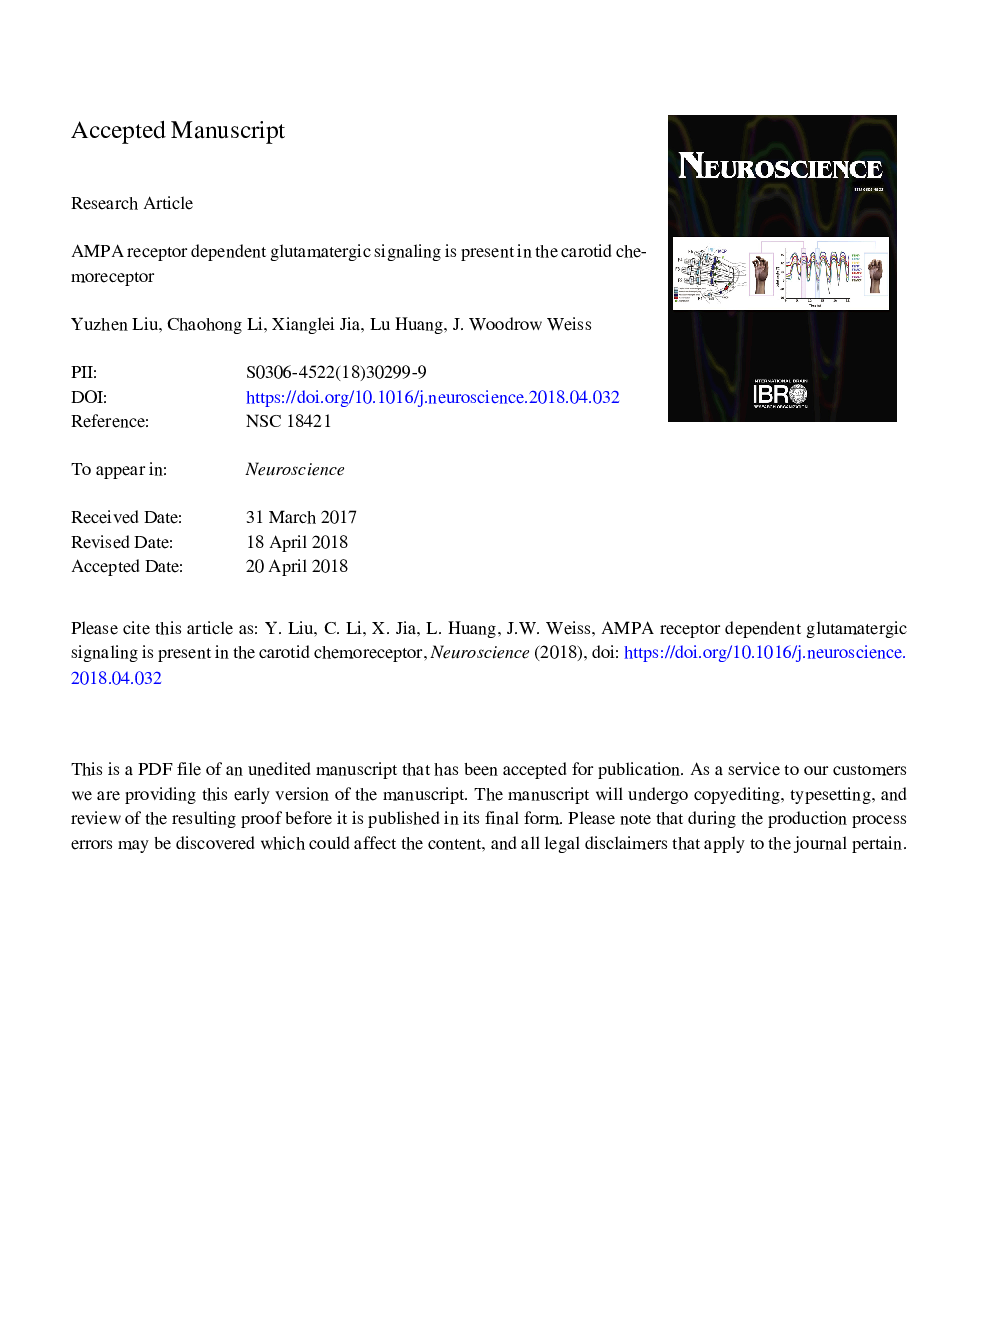 AMPA Receptor-Dependent Glutamatergic Signaling is Present in the Carotid Chemoreceptor